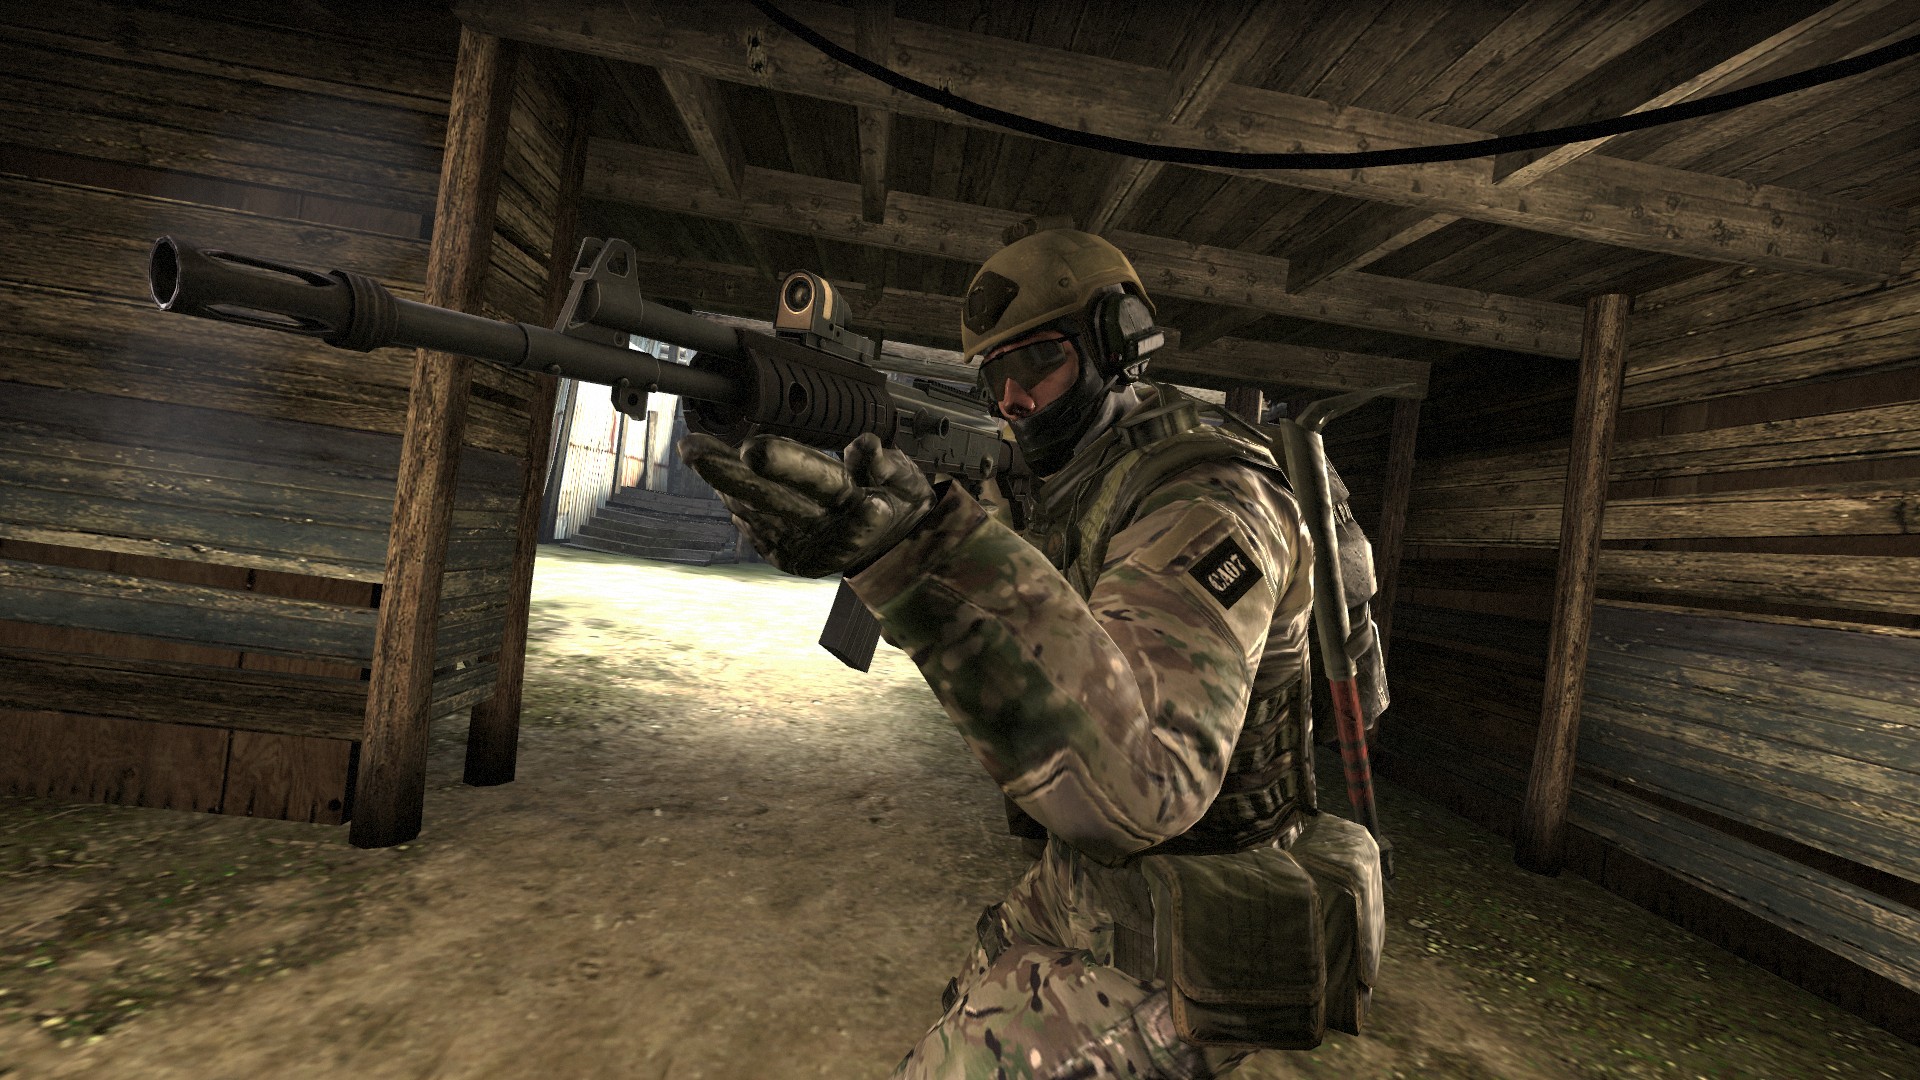 Skin de Counter-Strike: Global Offensive é vendida por US$ 400 mil -  Adrenaline